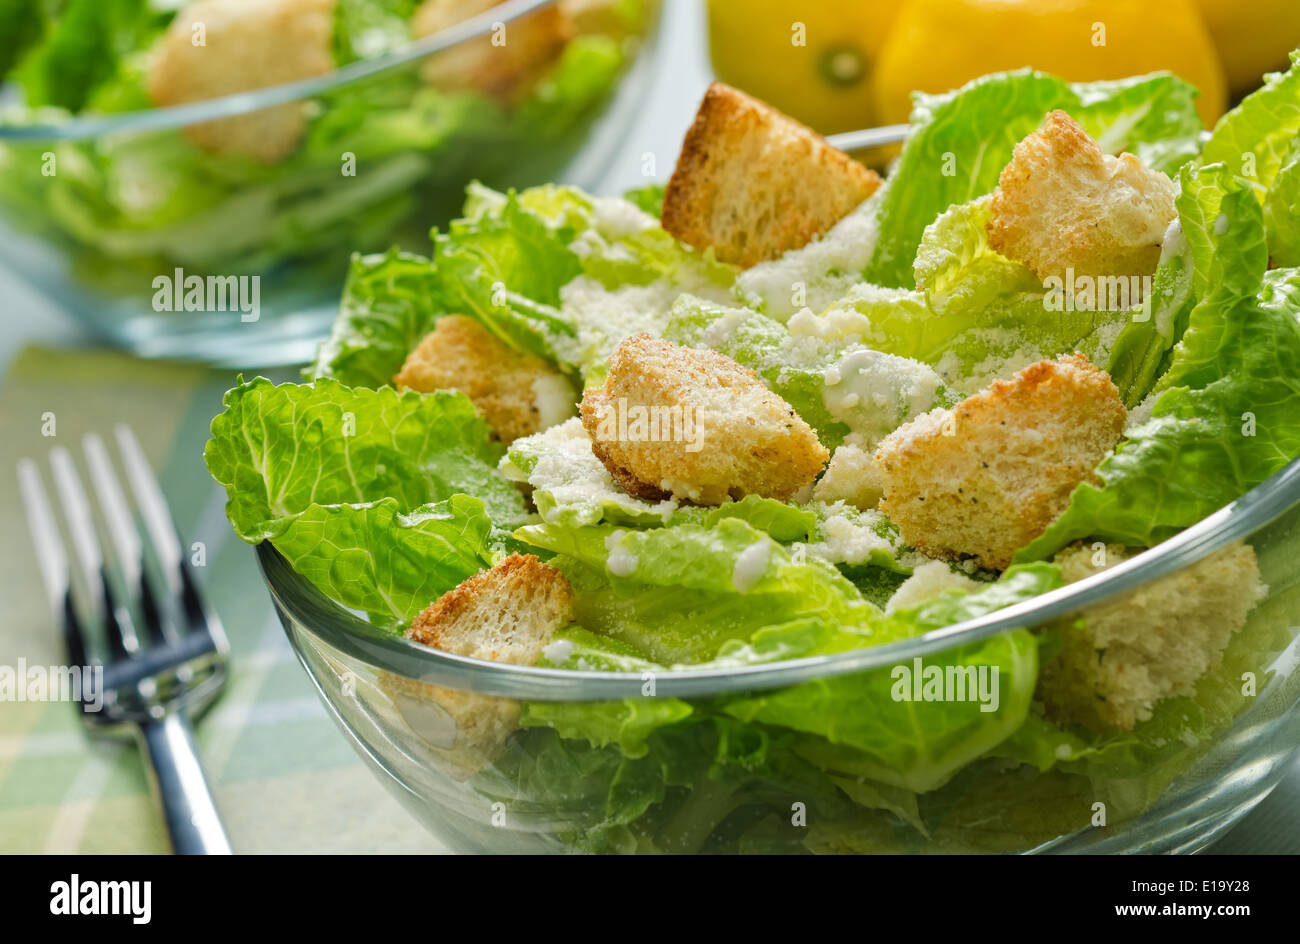 A bowl of crispy caesar salad with romaine lettuce, croutons, garlic, parmesan, and lemon. Stock Photo